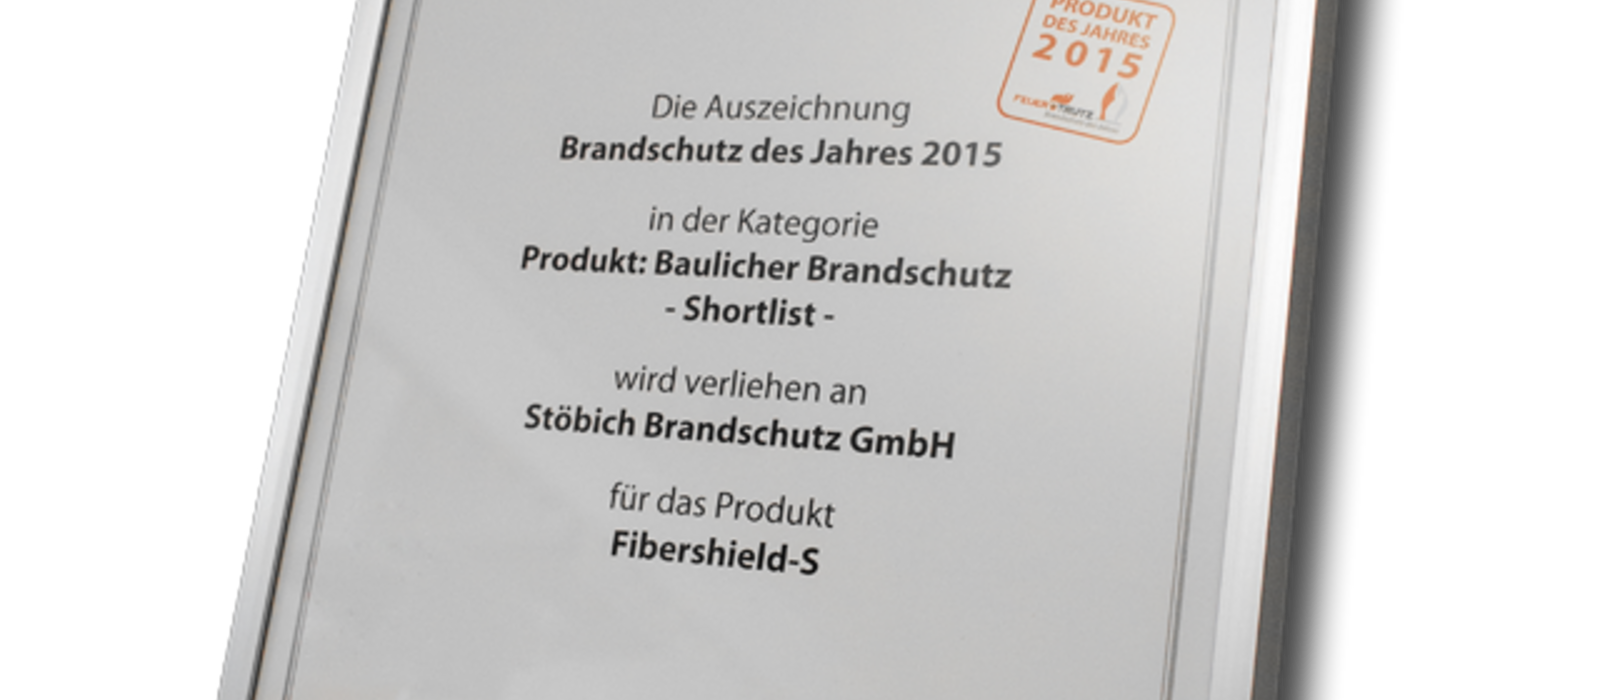 Stöbich-brandscherm voor German Design Award genomineerd